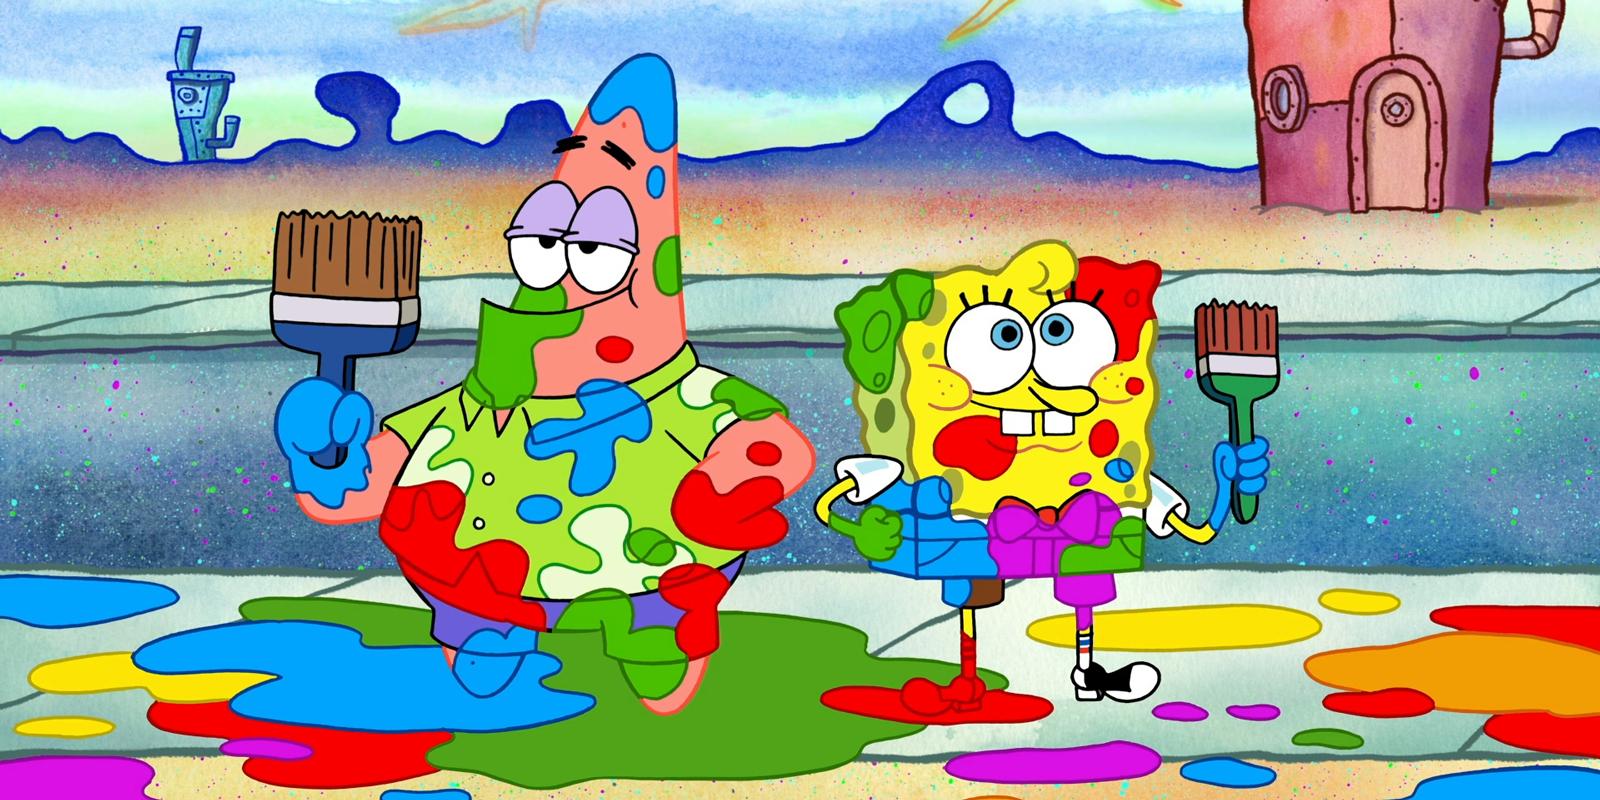 SpongeBob' Spinoff Series 'The Patrick Star Show' Set At Nickelodeon